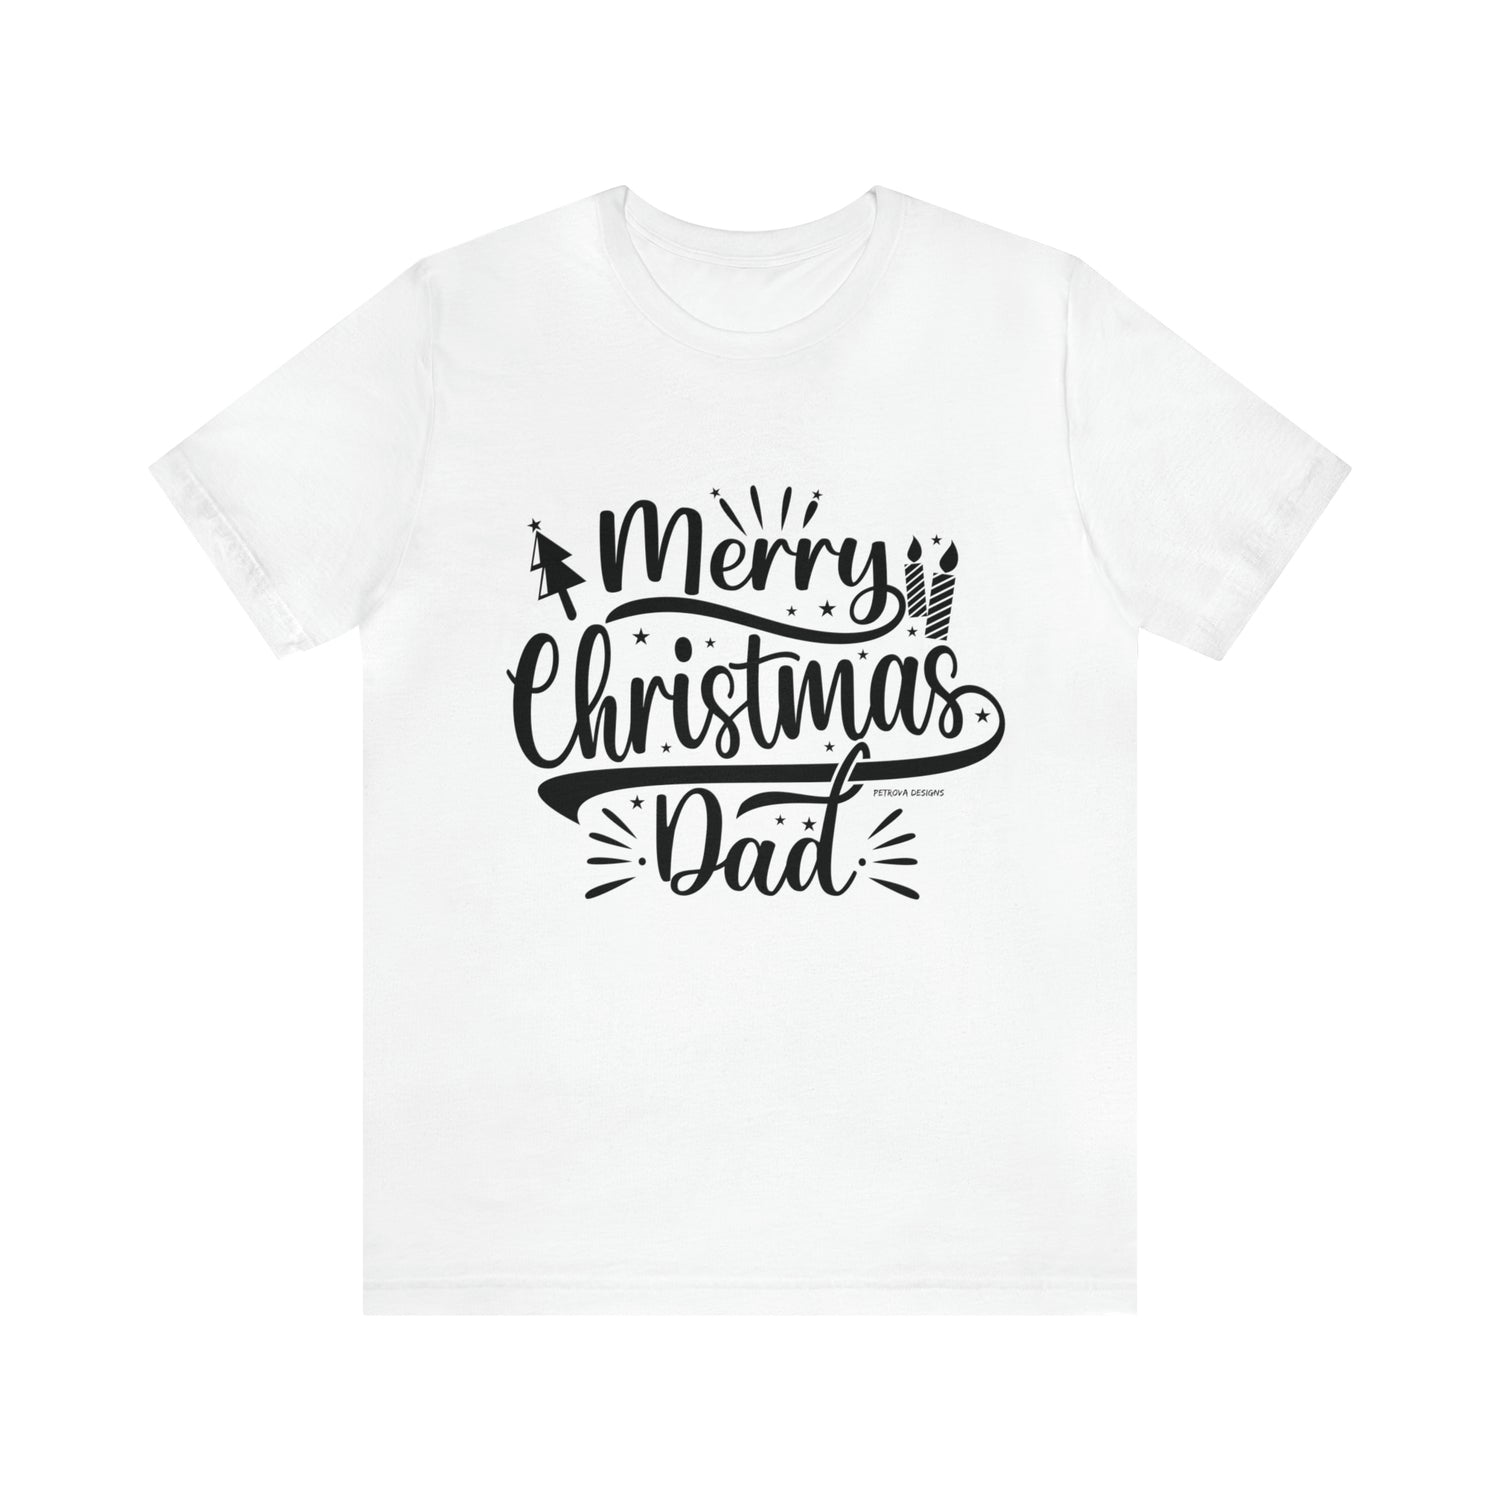 T-Shirt Christmas Gift for Dad Tshirt Design Gift for Dad Short Sleeved Shirt Christmas Petrova Designs